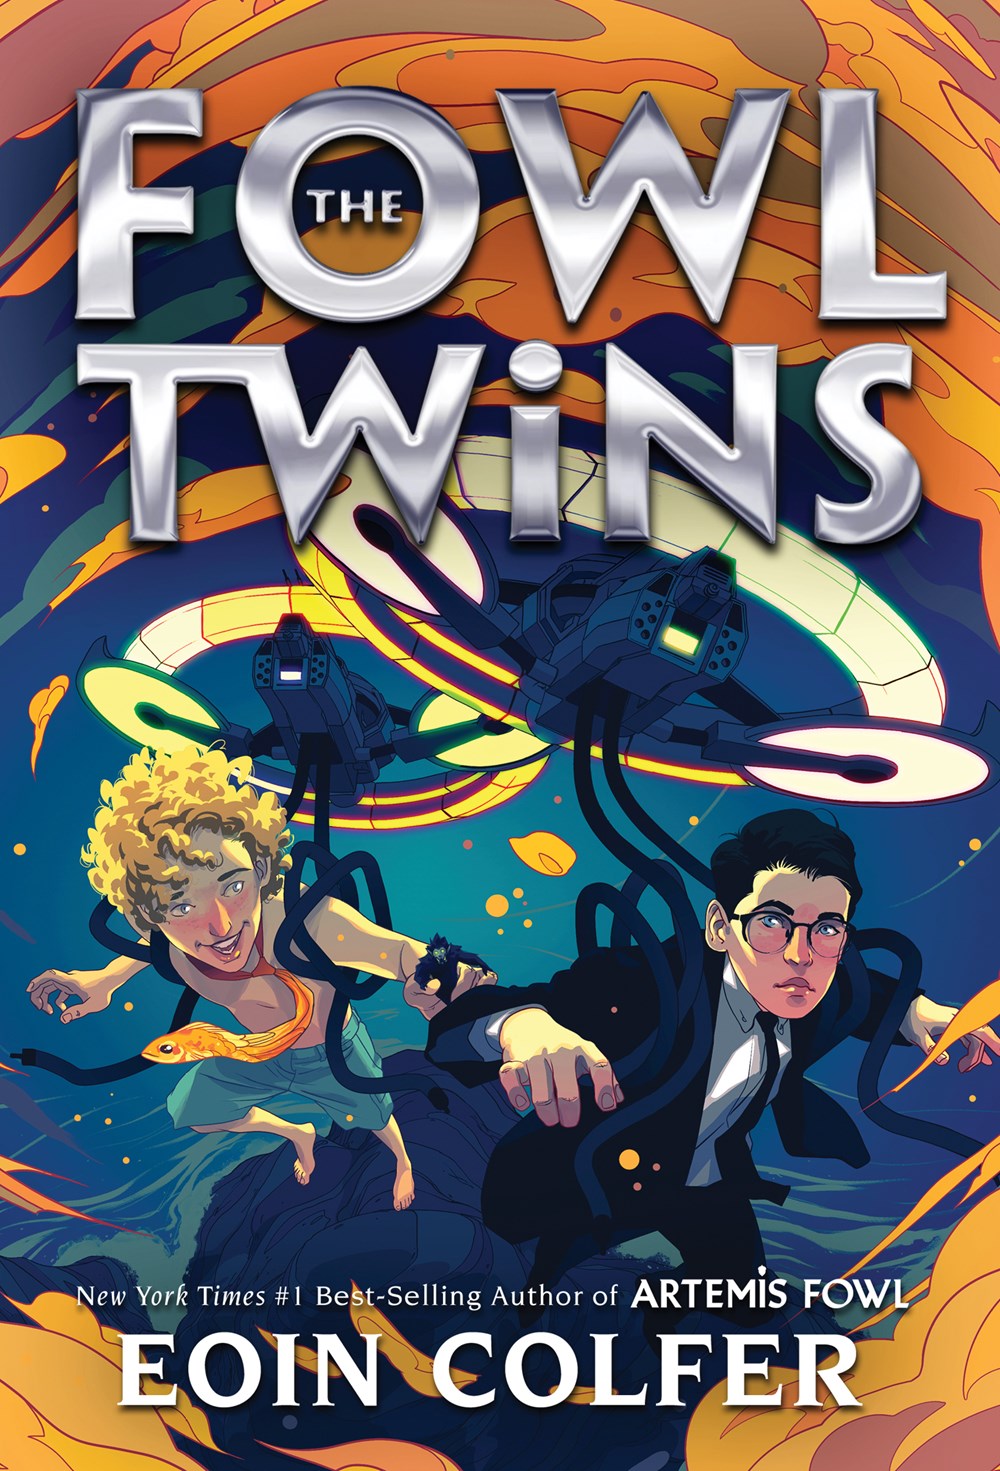 fowl twins book 4